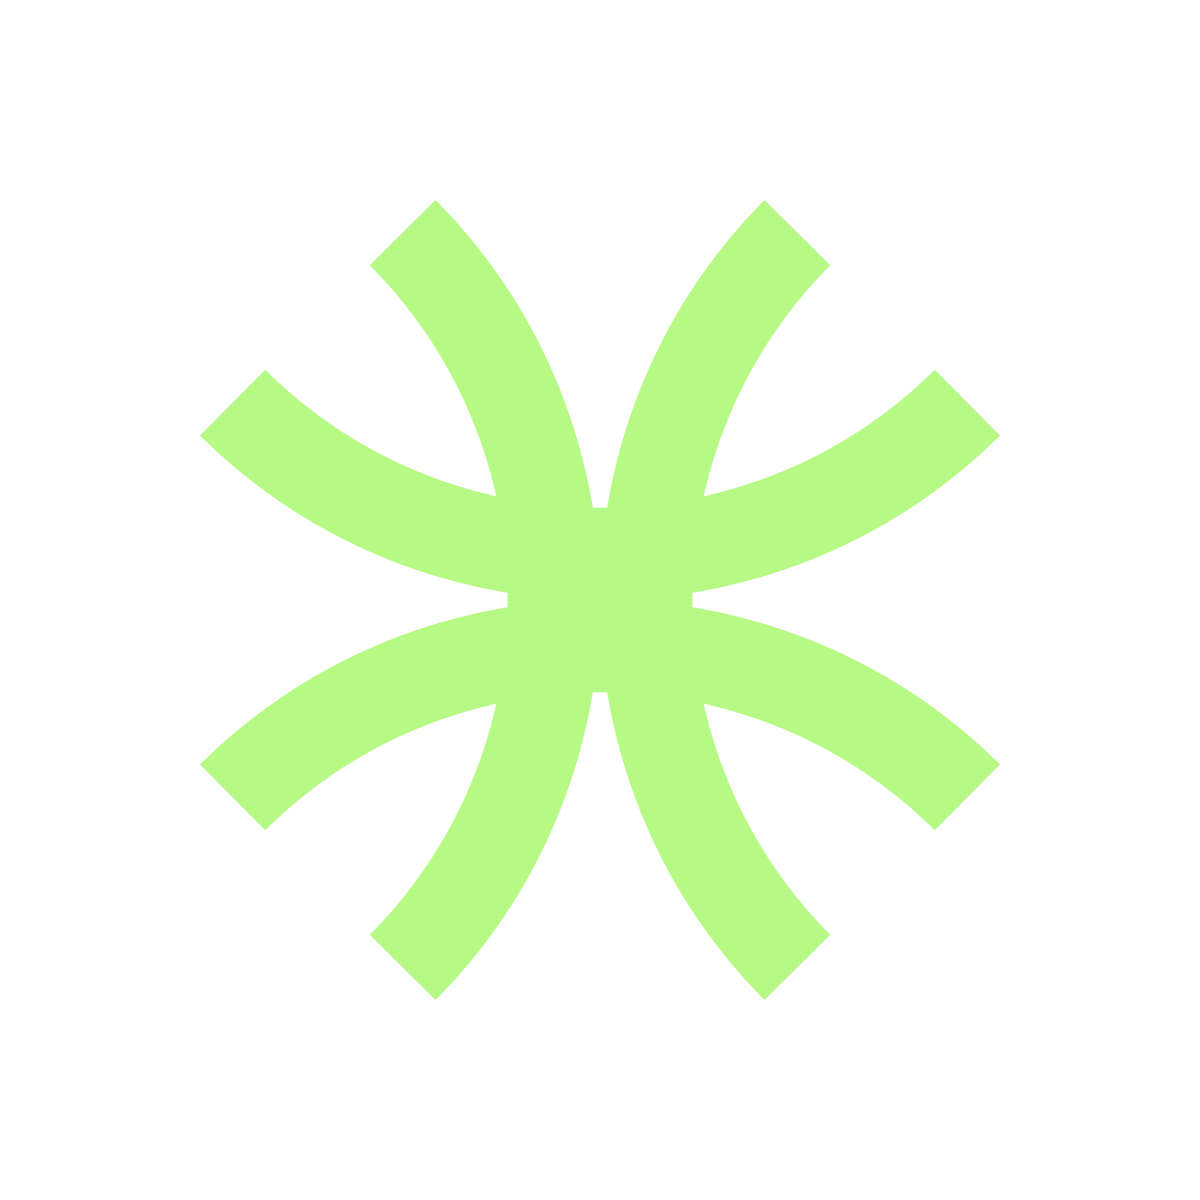 Green Star - Crunchbase Company Profile & Funding